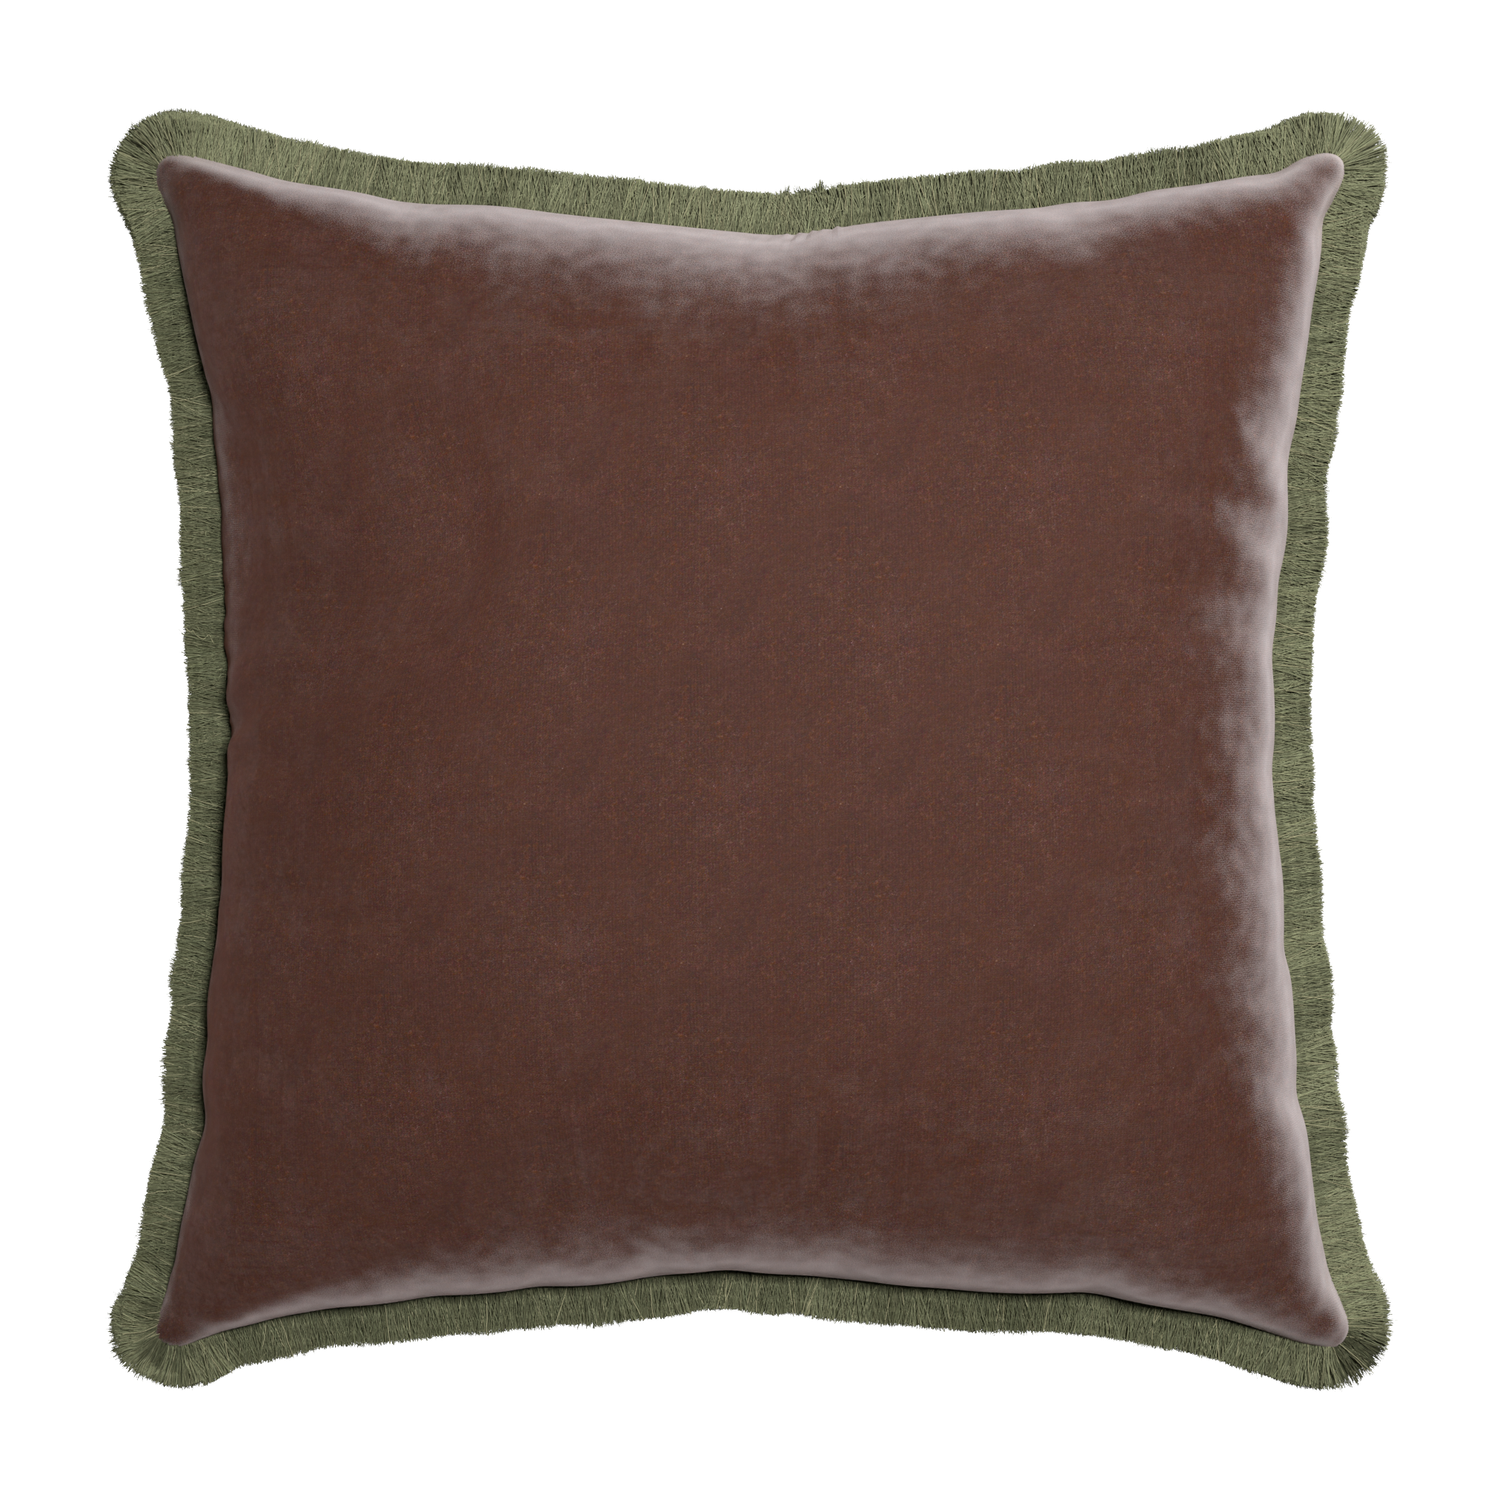 square brown velvet pillow with sage green fringe